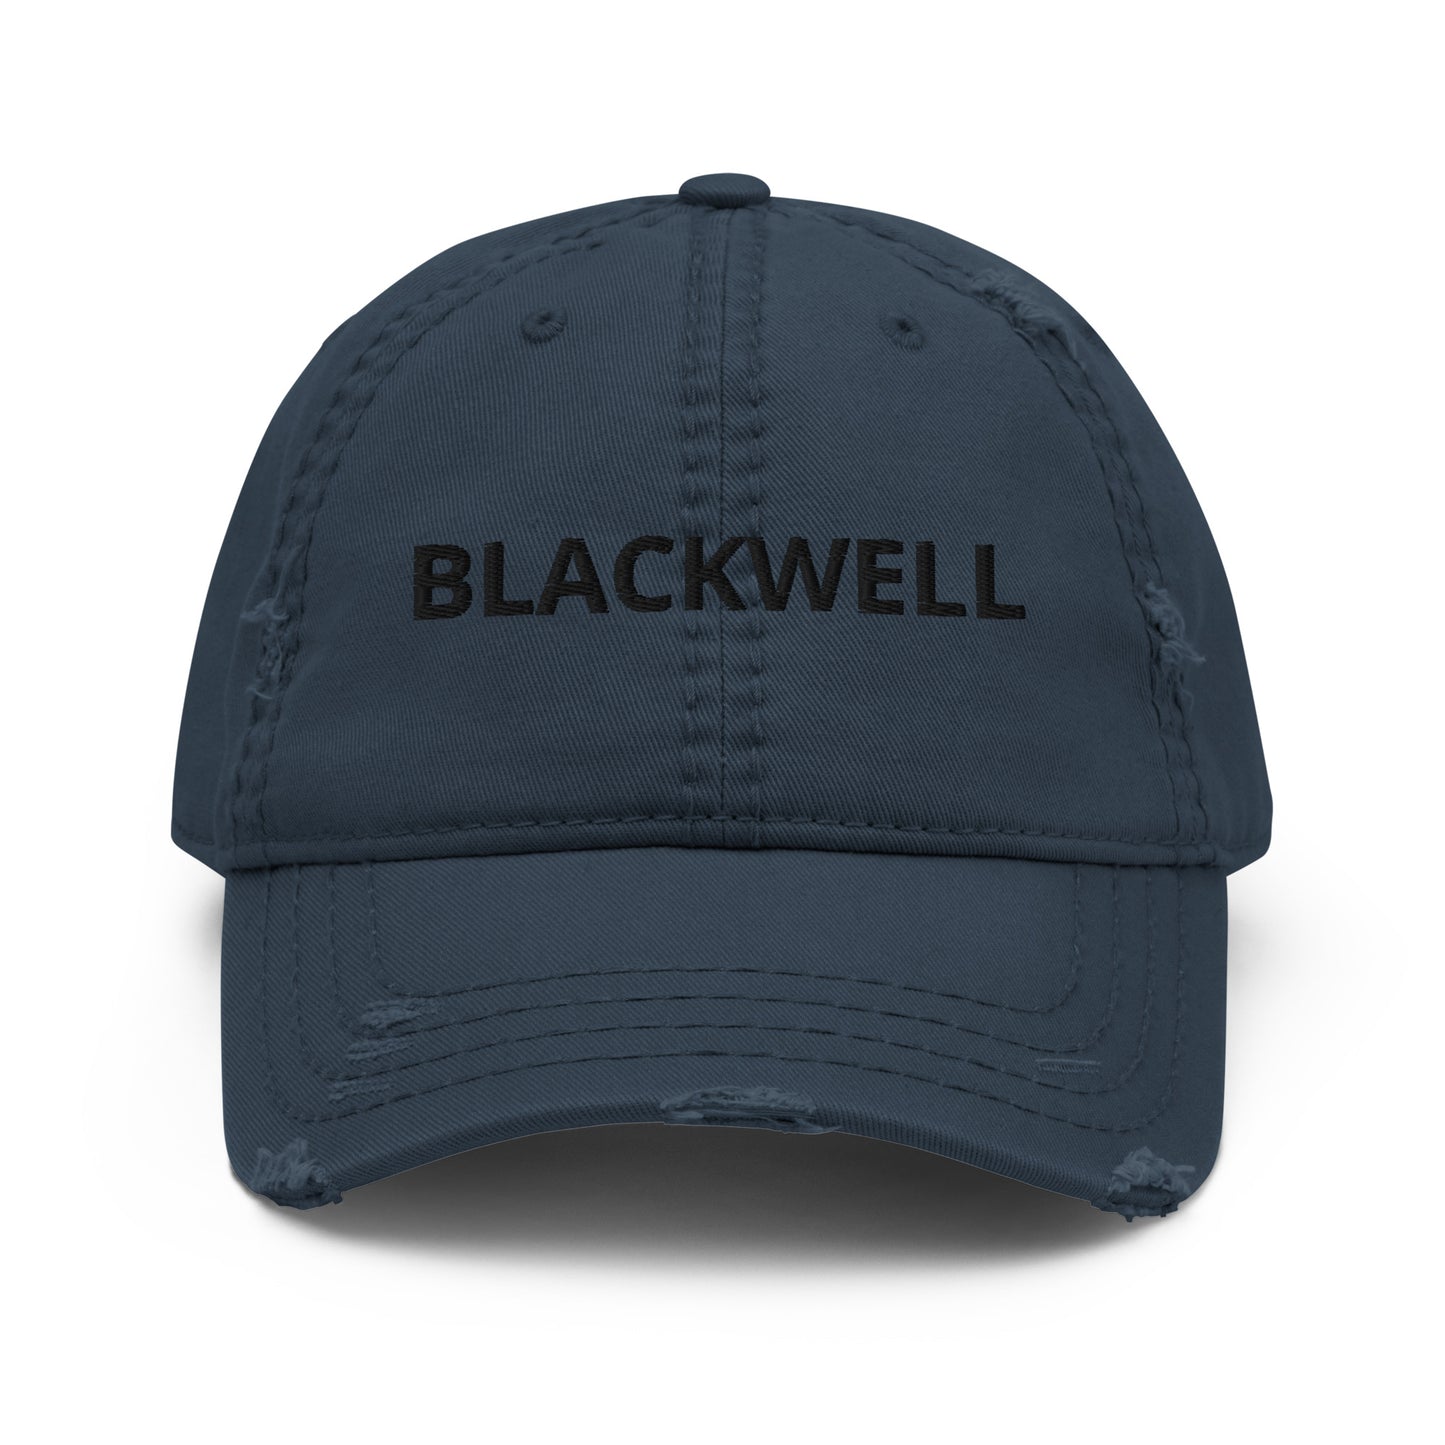 Blackwell Distressed Dad Hat